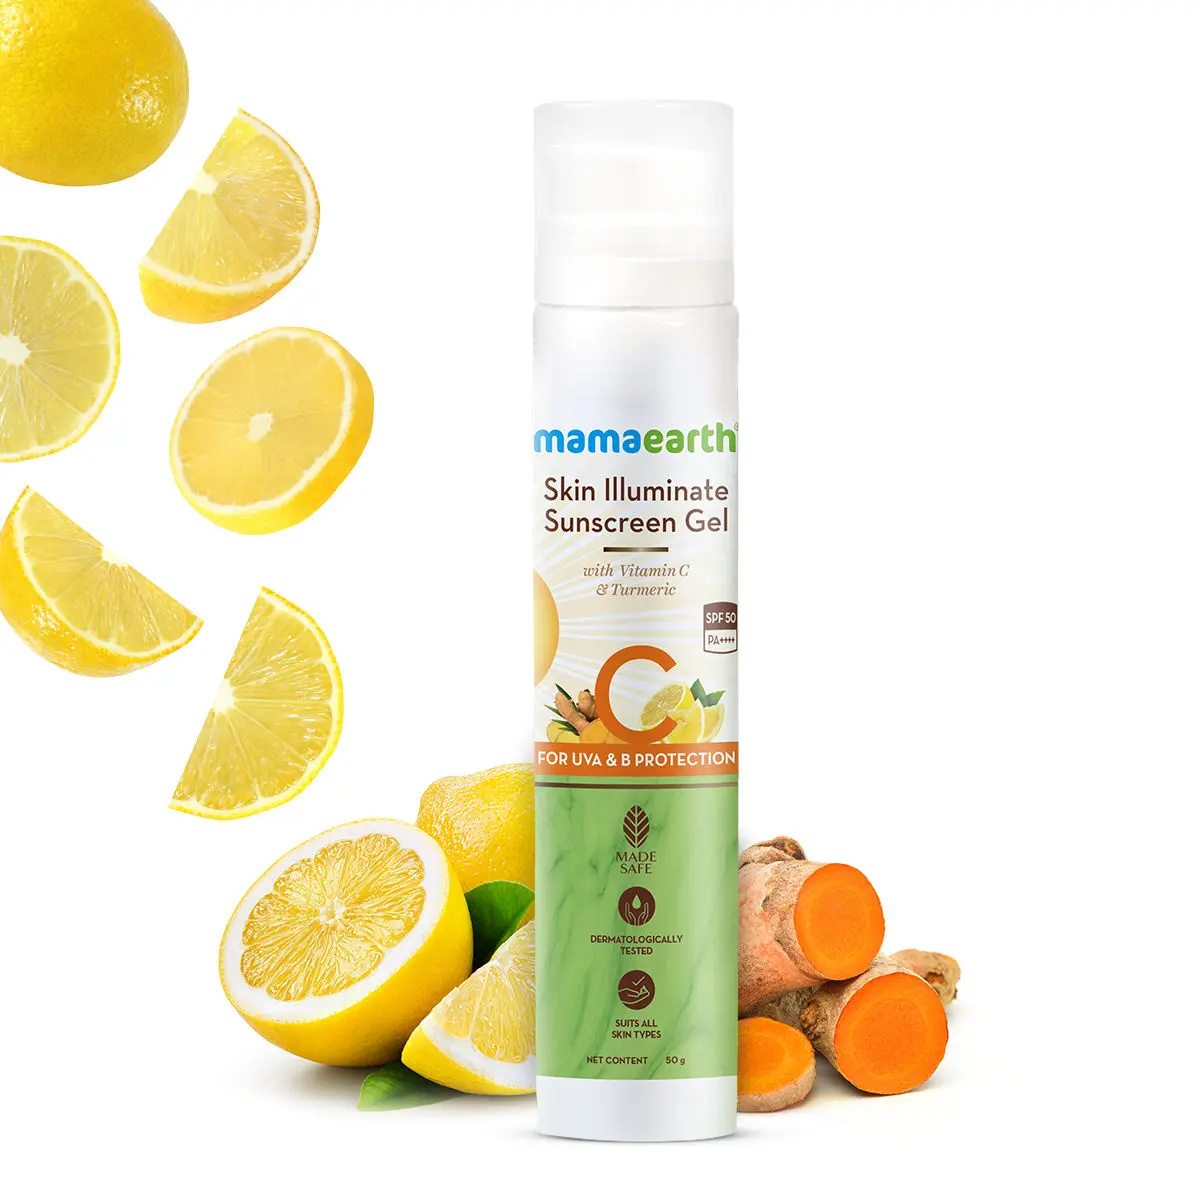 Mamaearth Skin Illuminate Sunscreen with SPF 50 Gel with Vitamin C & Turmeric for UVA & B Protection, Pa+++ -(50 g)